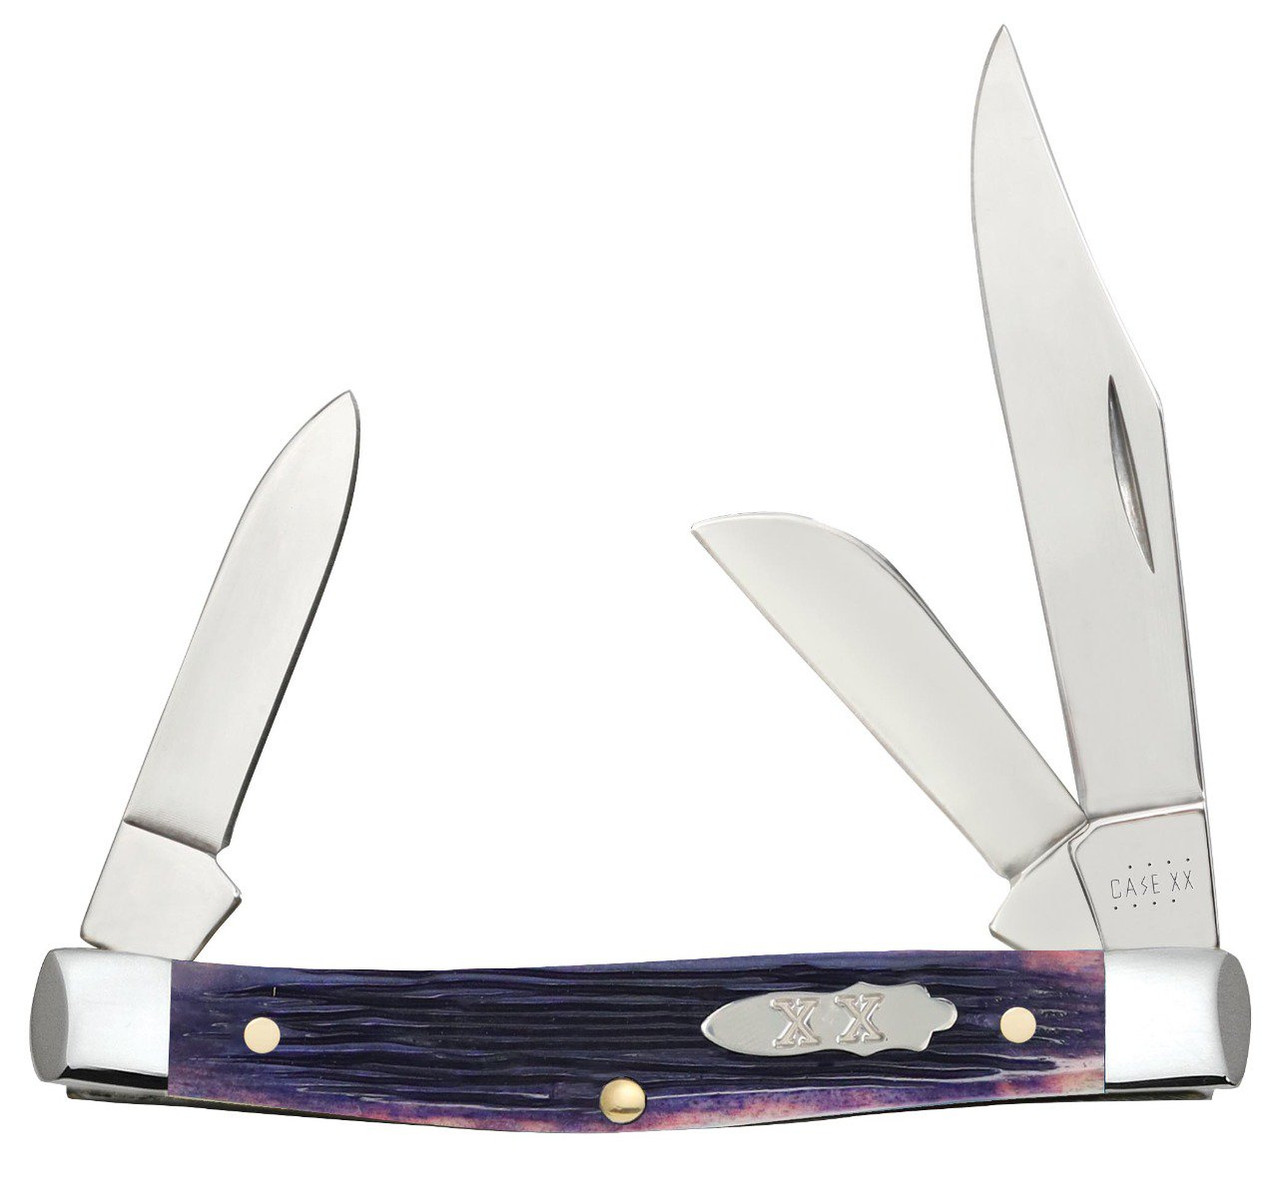  Case XX Knives Sodbuster Jr Barnboard Purple Bone 9702  Stainless Pocket Knife : Sports & Outdoors